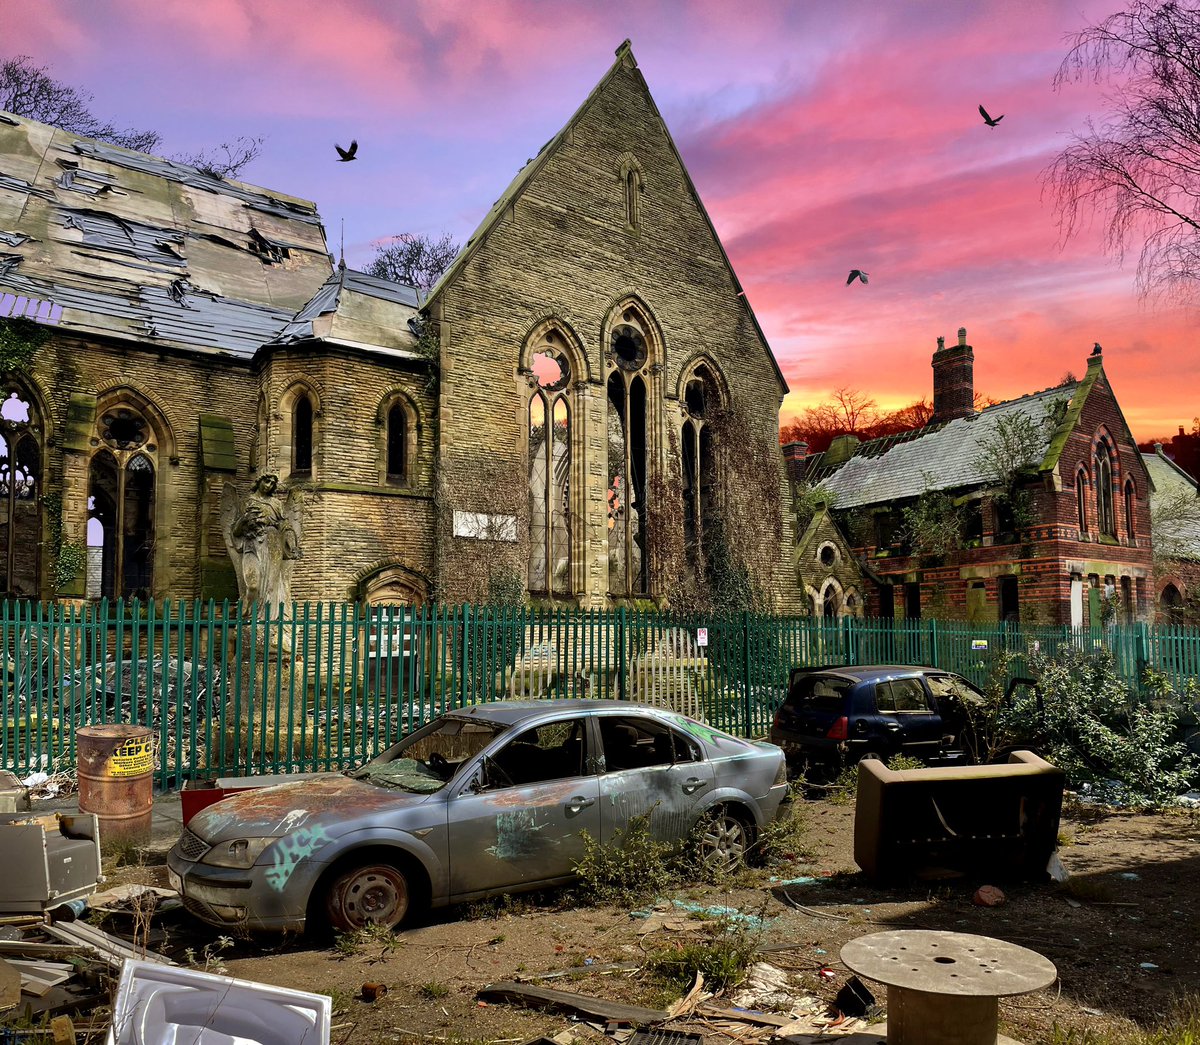 ‘Carmageddon’ #Scrapped #Cars #UrbanDecay #UrbanArt #UrbanPhotography #Abandoned #Derelict #Urbex #UKPhotography #UrbanLandscape @GrimArtGroup